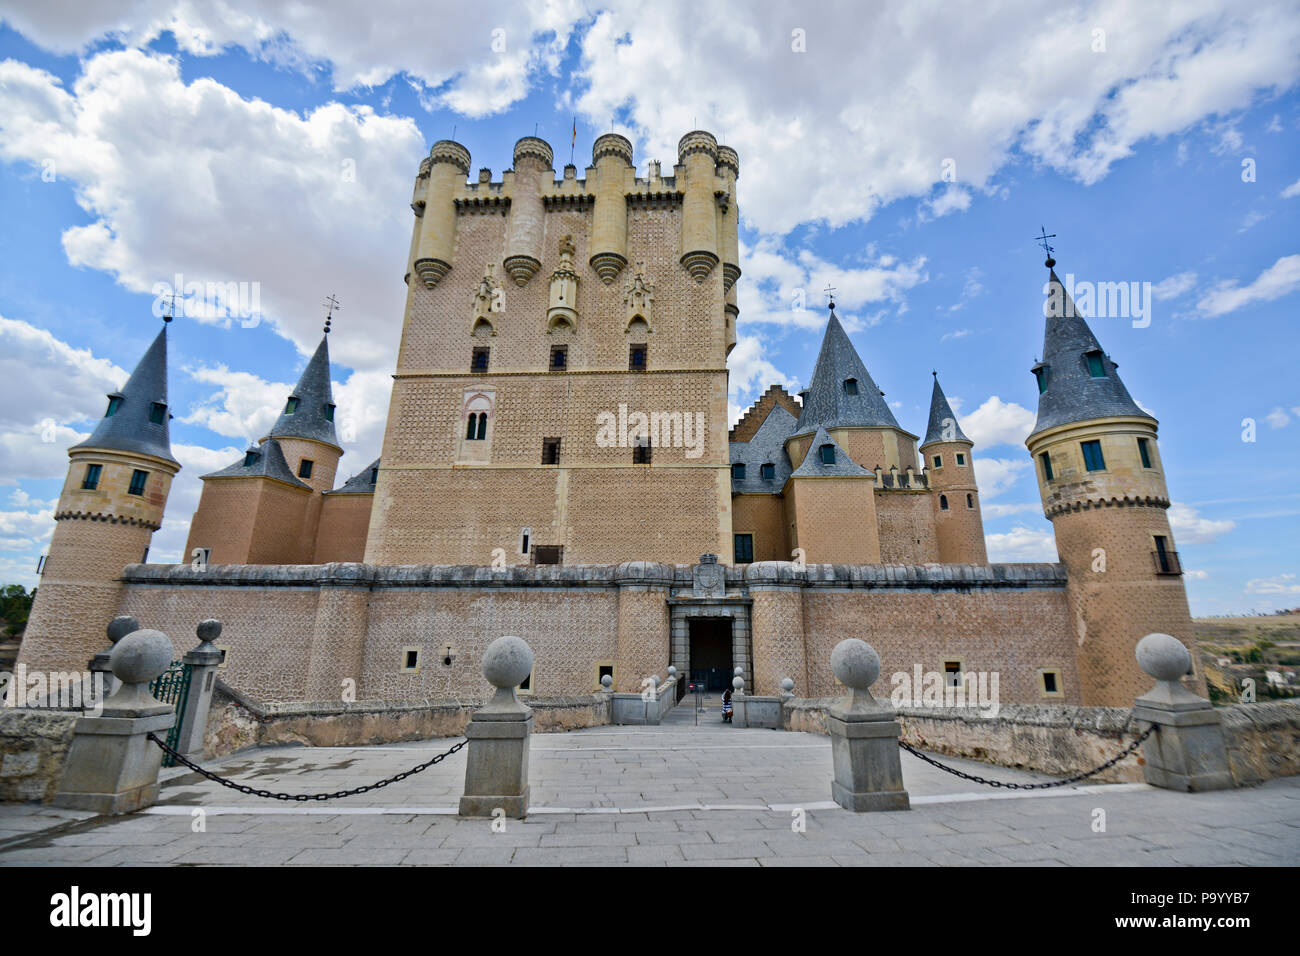 Tower of John II of Castile - Alcazar of Segovia, Spain Stock Photo